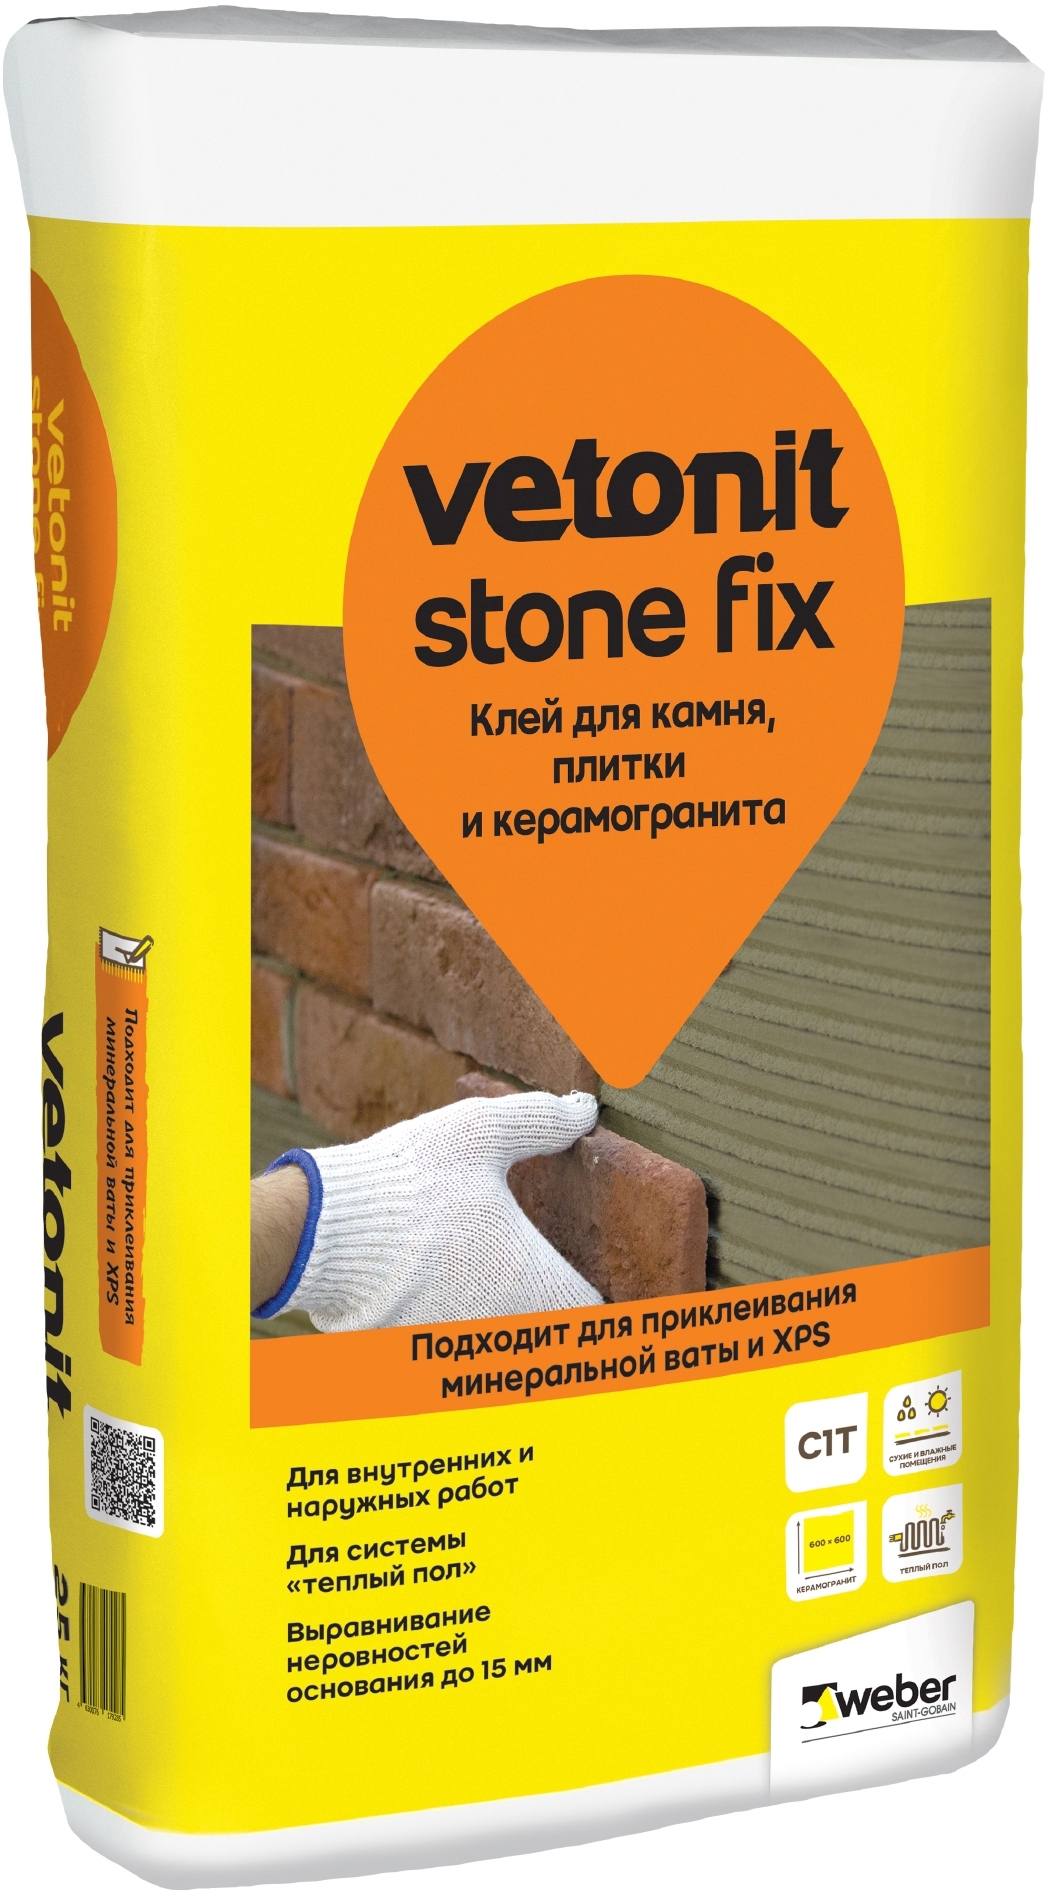 17358594 Клей для камня и керамогранита Stone Fix 25 кг Stonefix STLM-0008046 VETONIT